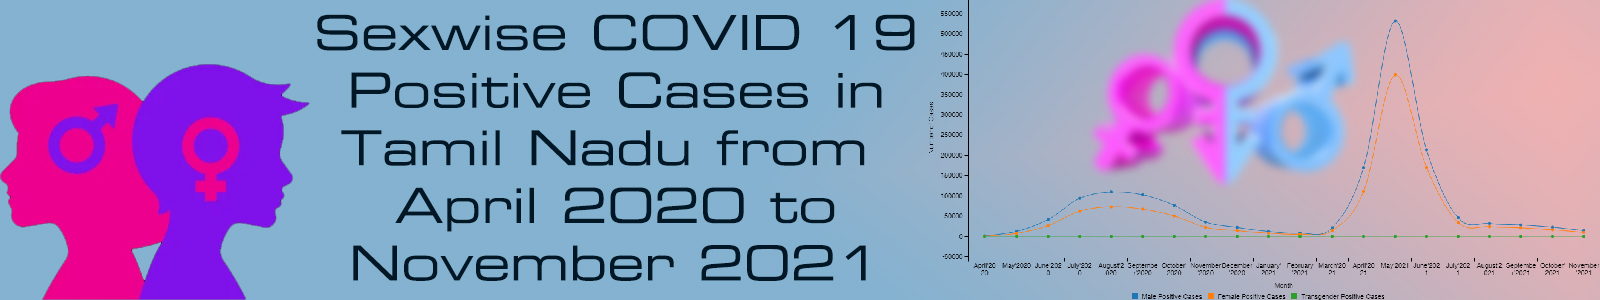 Sexwise Cases till Nov 2021